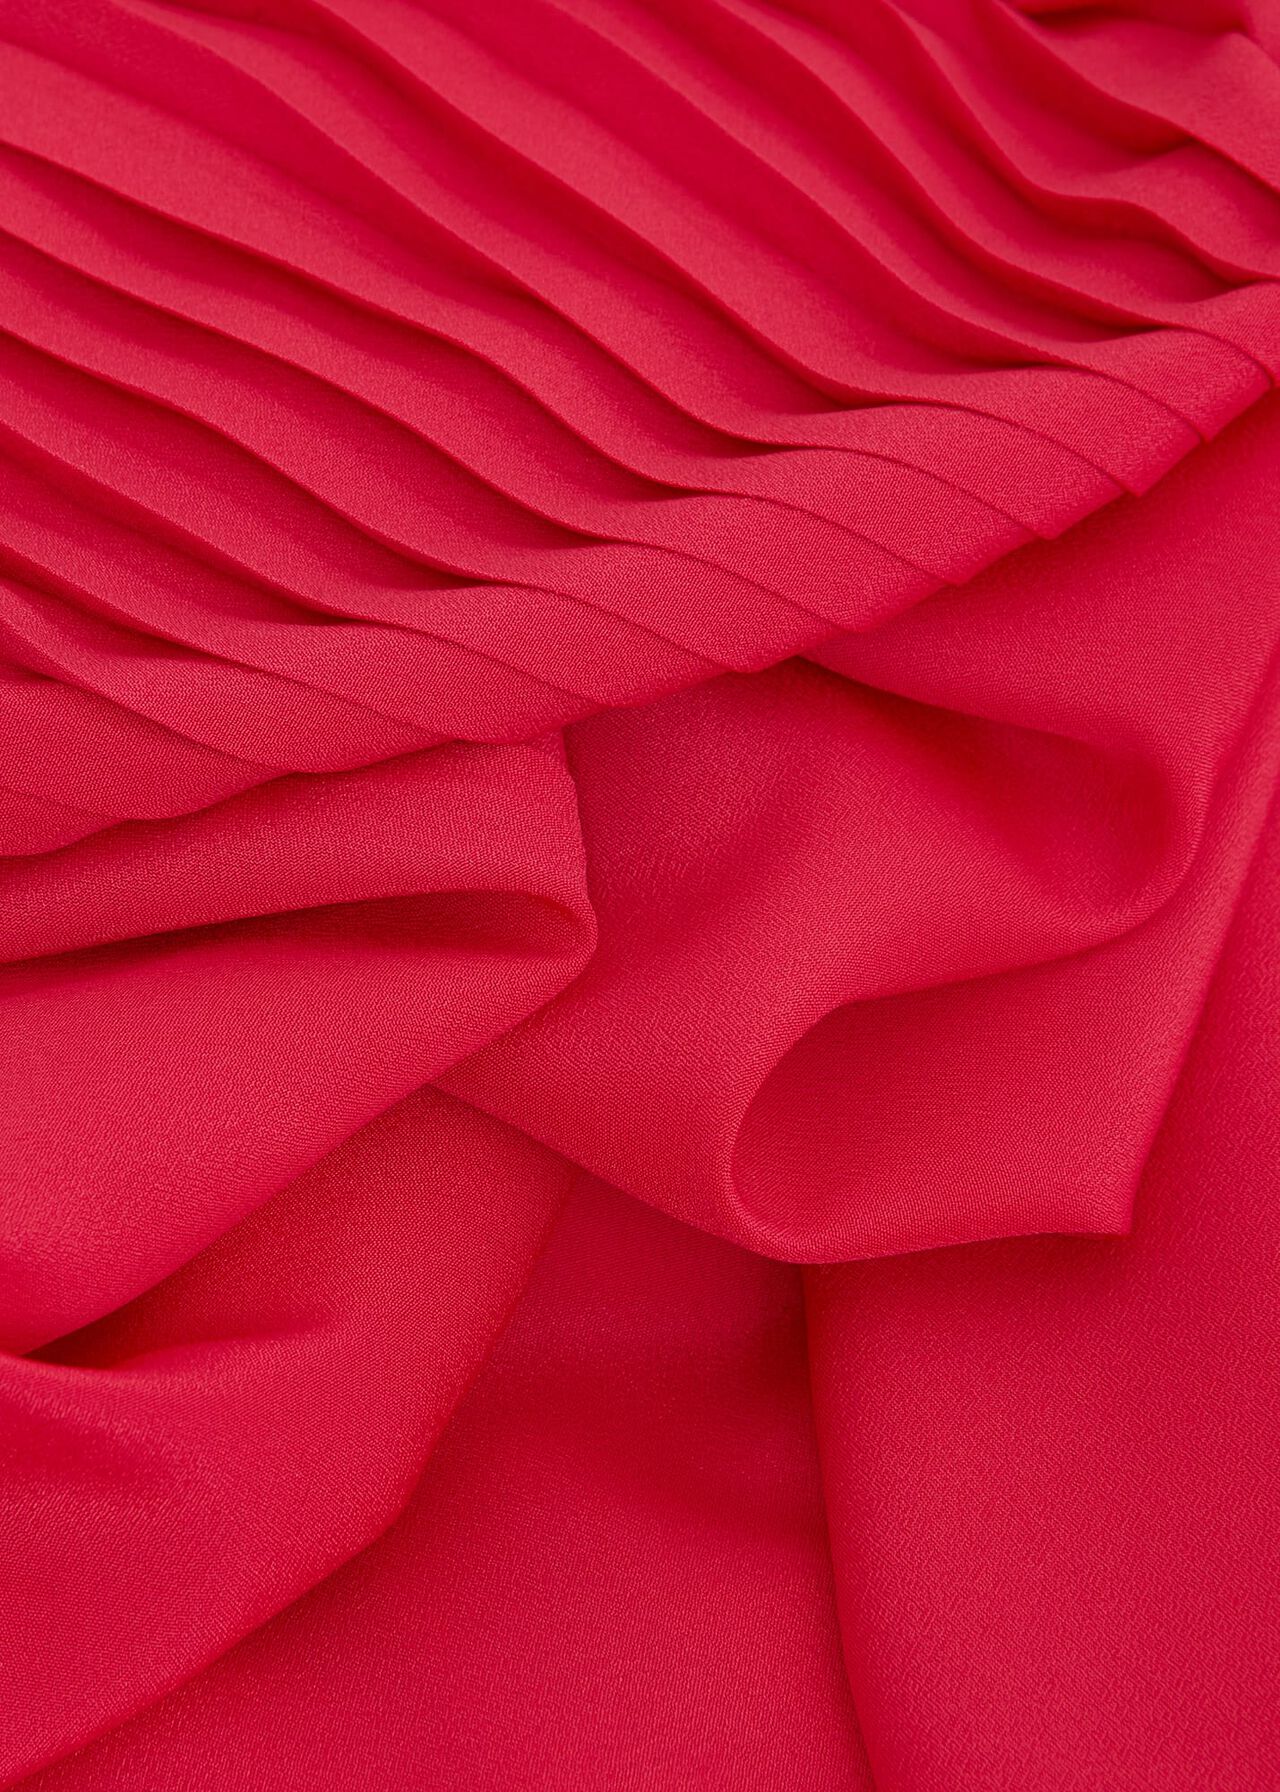 Adrianna Midi Dress, Rouge Pink, hi-res